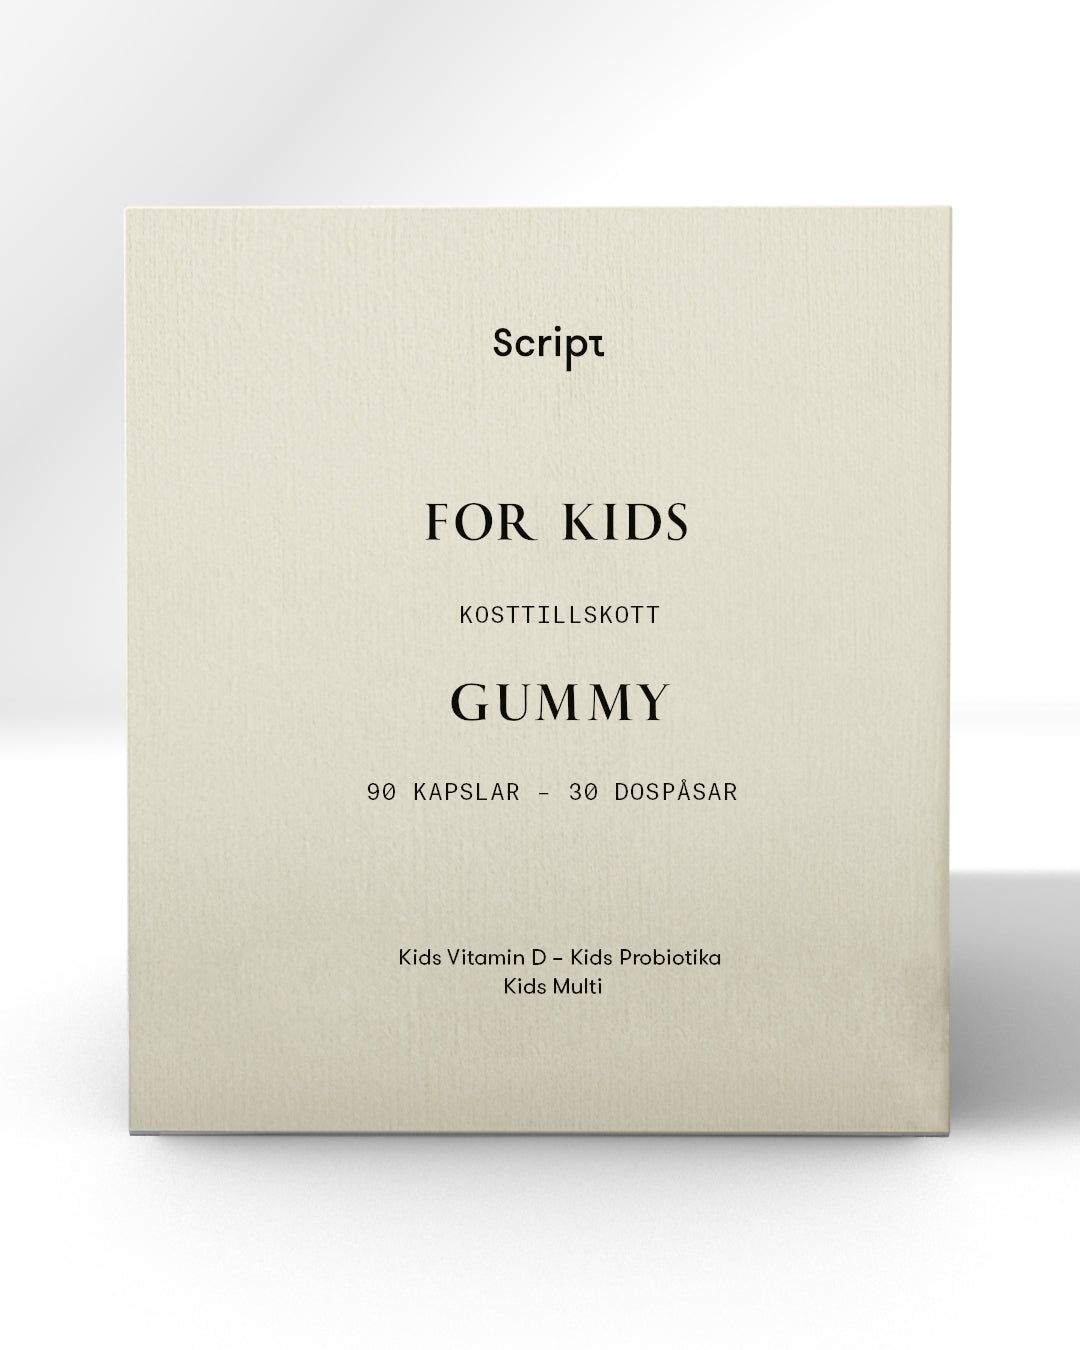 For Kids Gummy Kit - 30 dospåsar